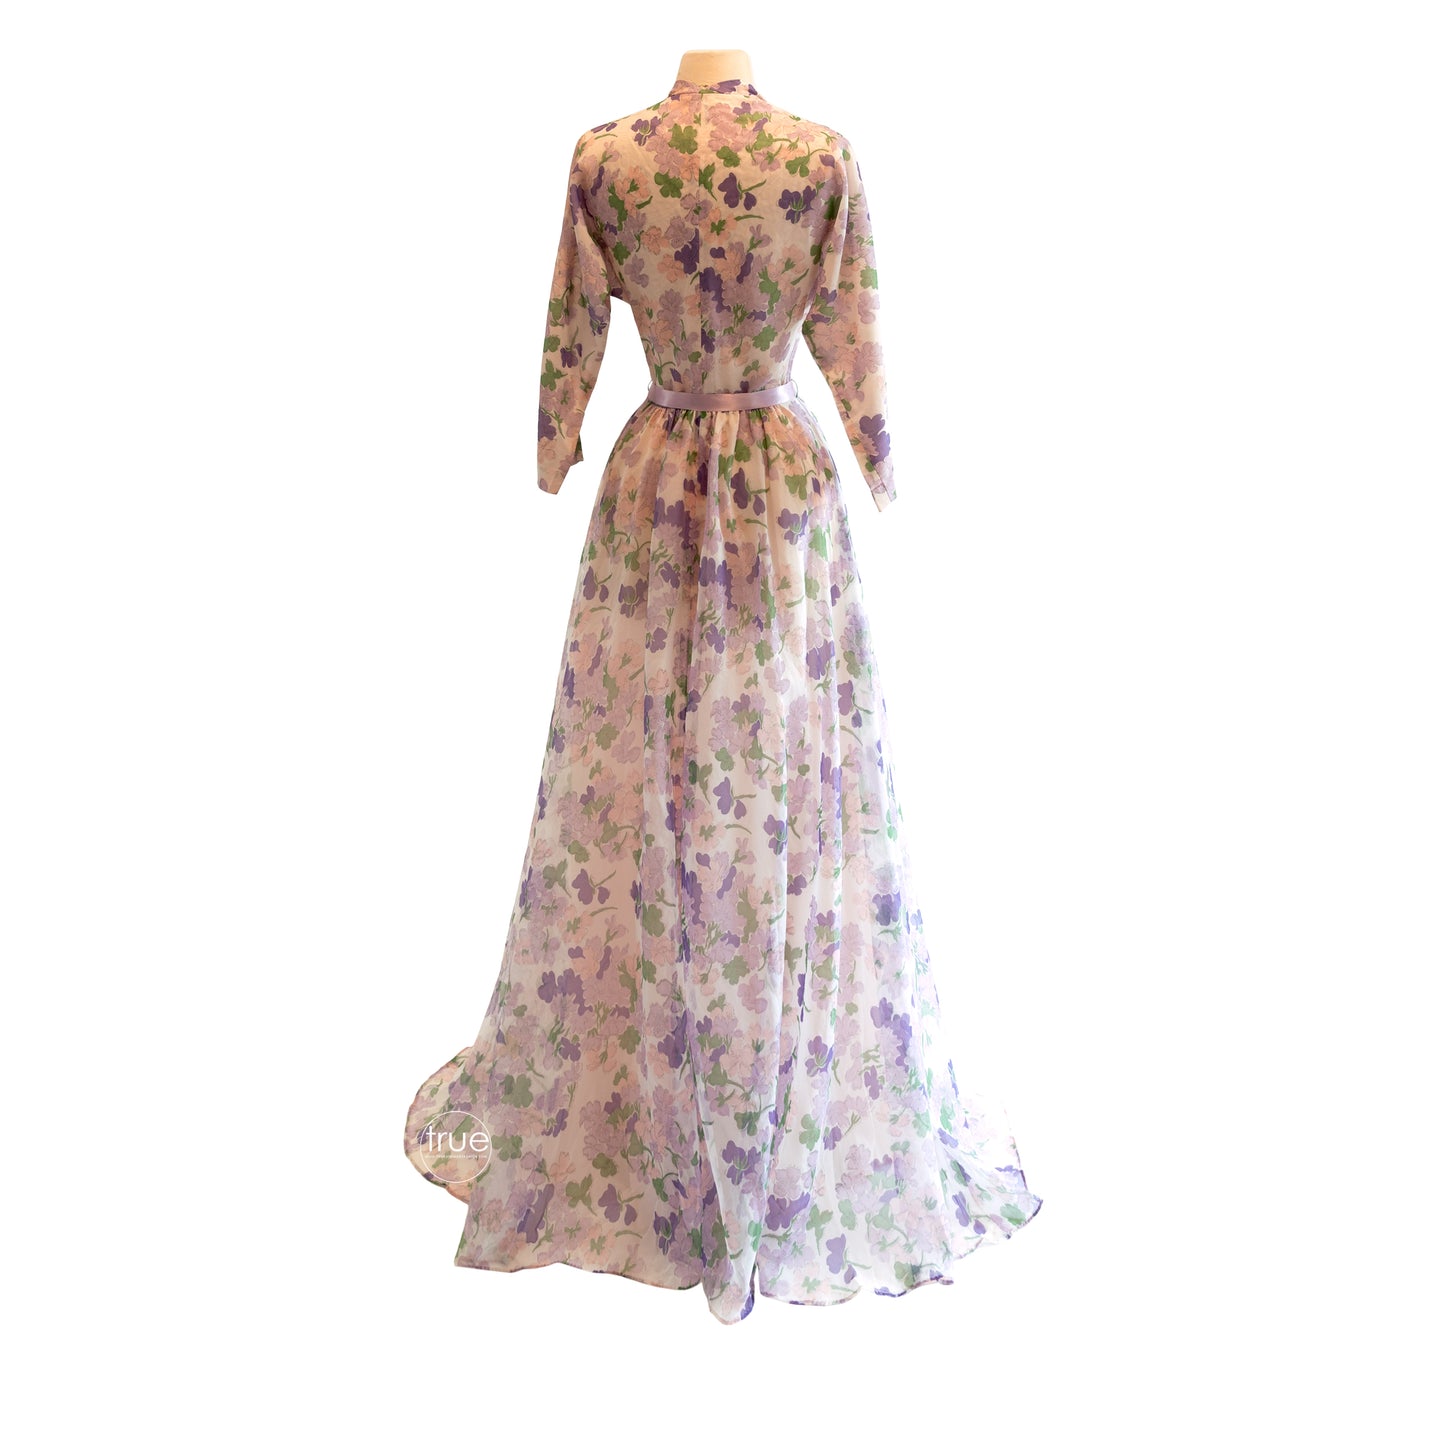 vintage 1940's dress ...ethereal floaty spring floral dressing gown unworn